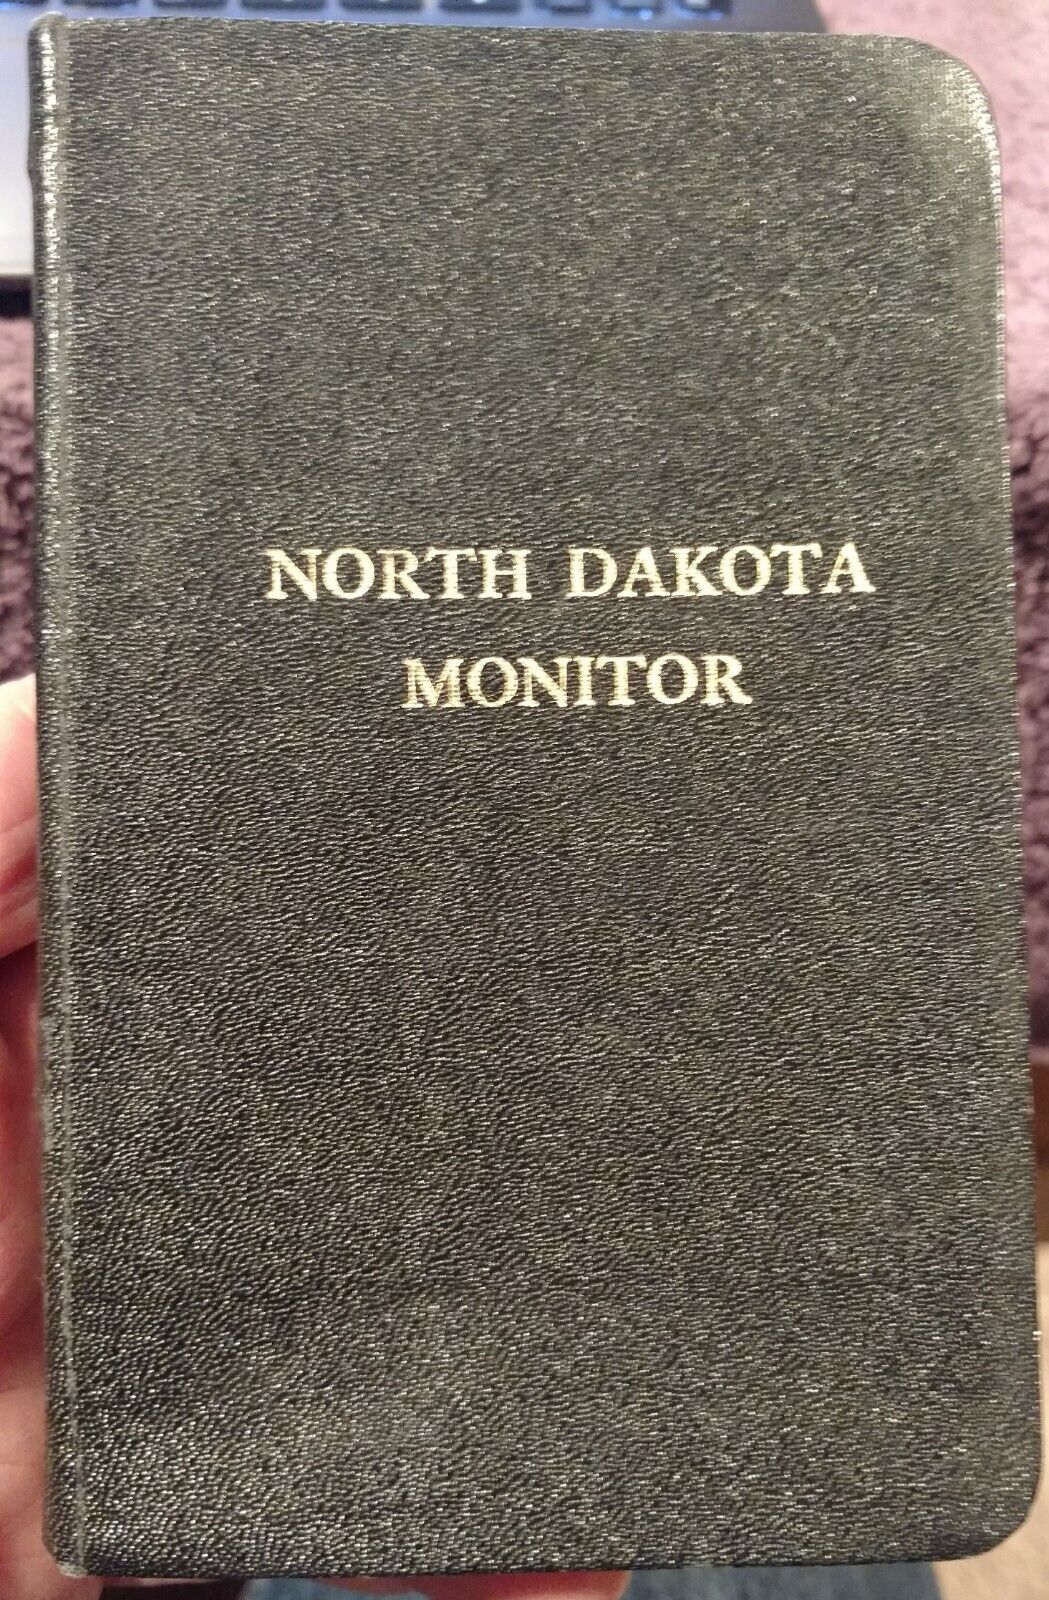 North Dakota Monitor 5th 1956 For the Use of the Symbolic Lodges Masons Grand